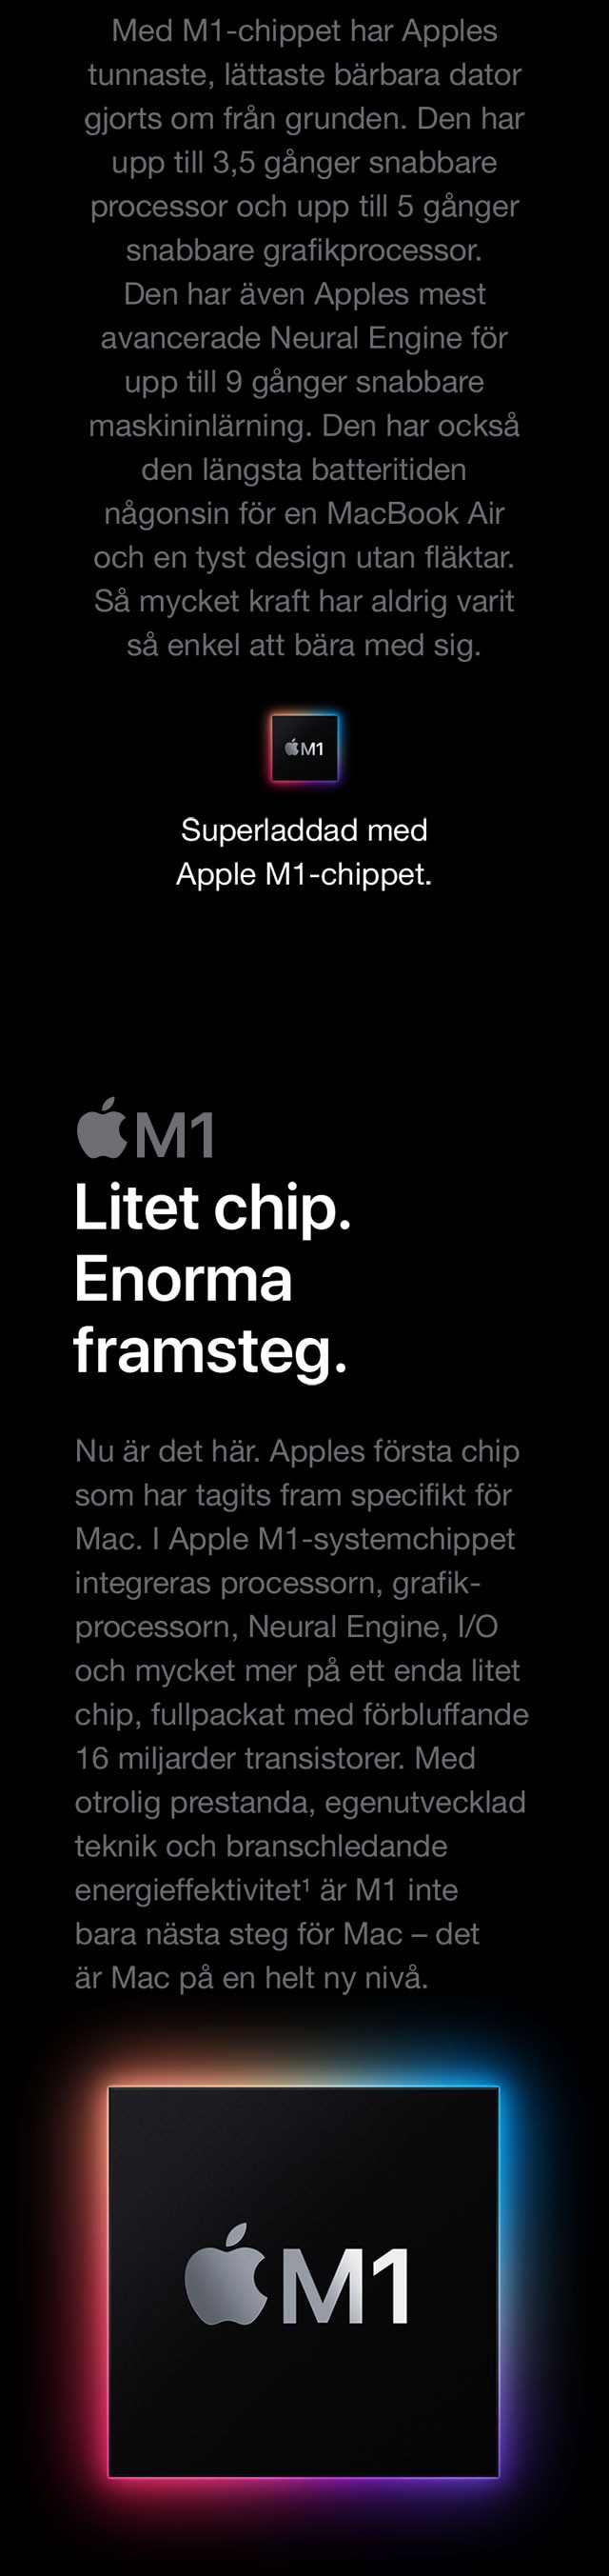 MacBook Air med Apple M1-chippet